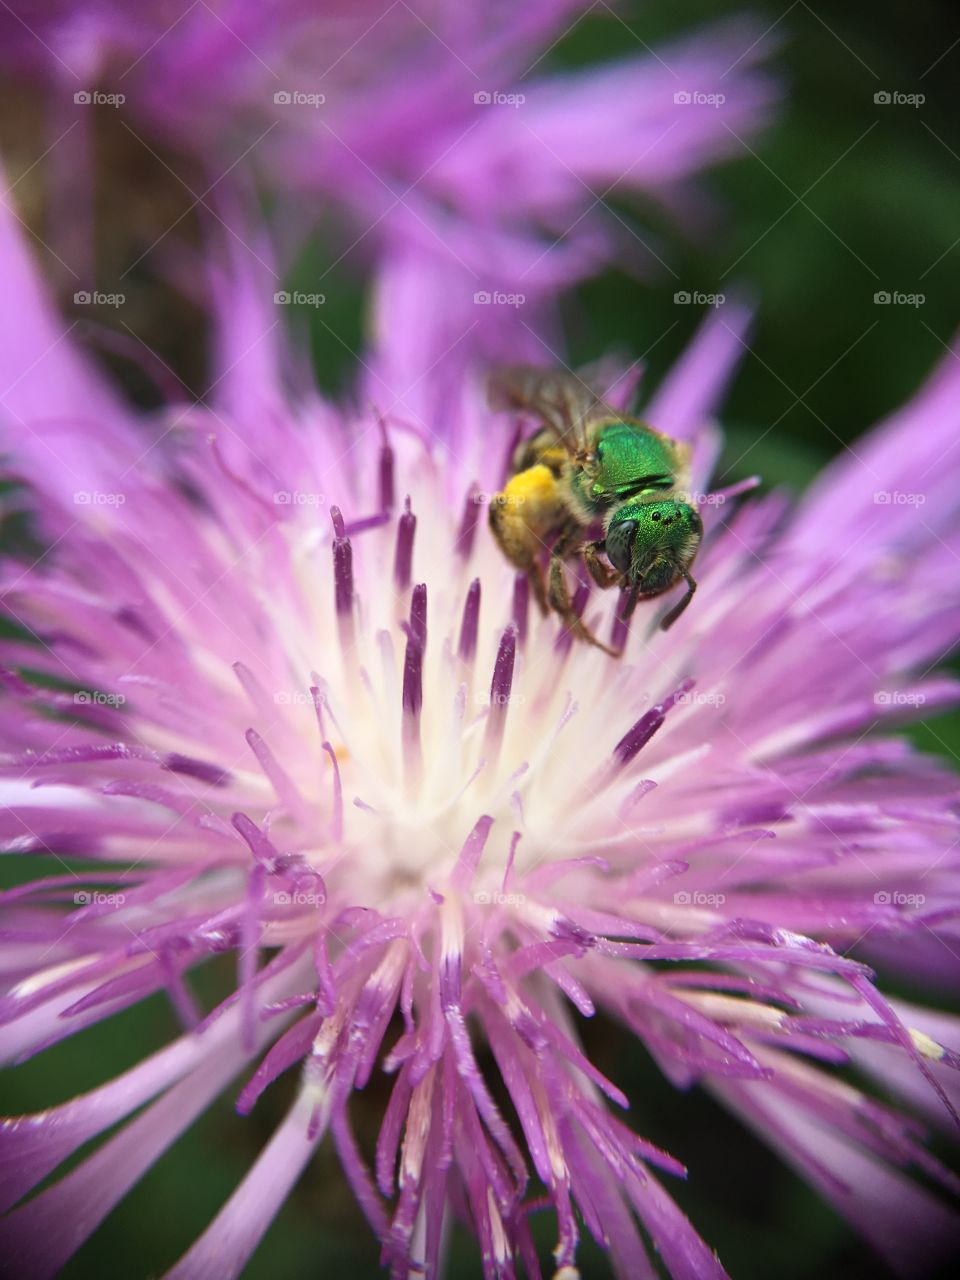 Green metallic bee on clover blossom